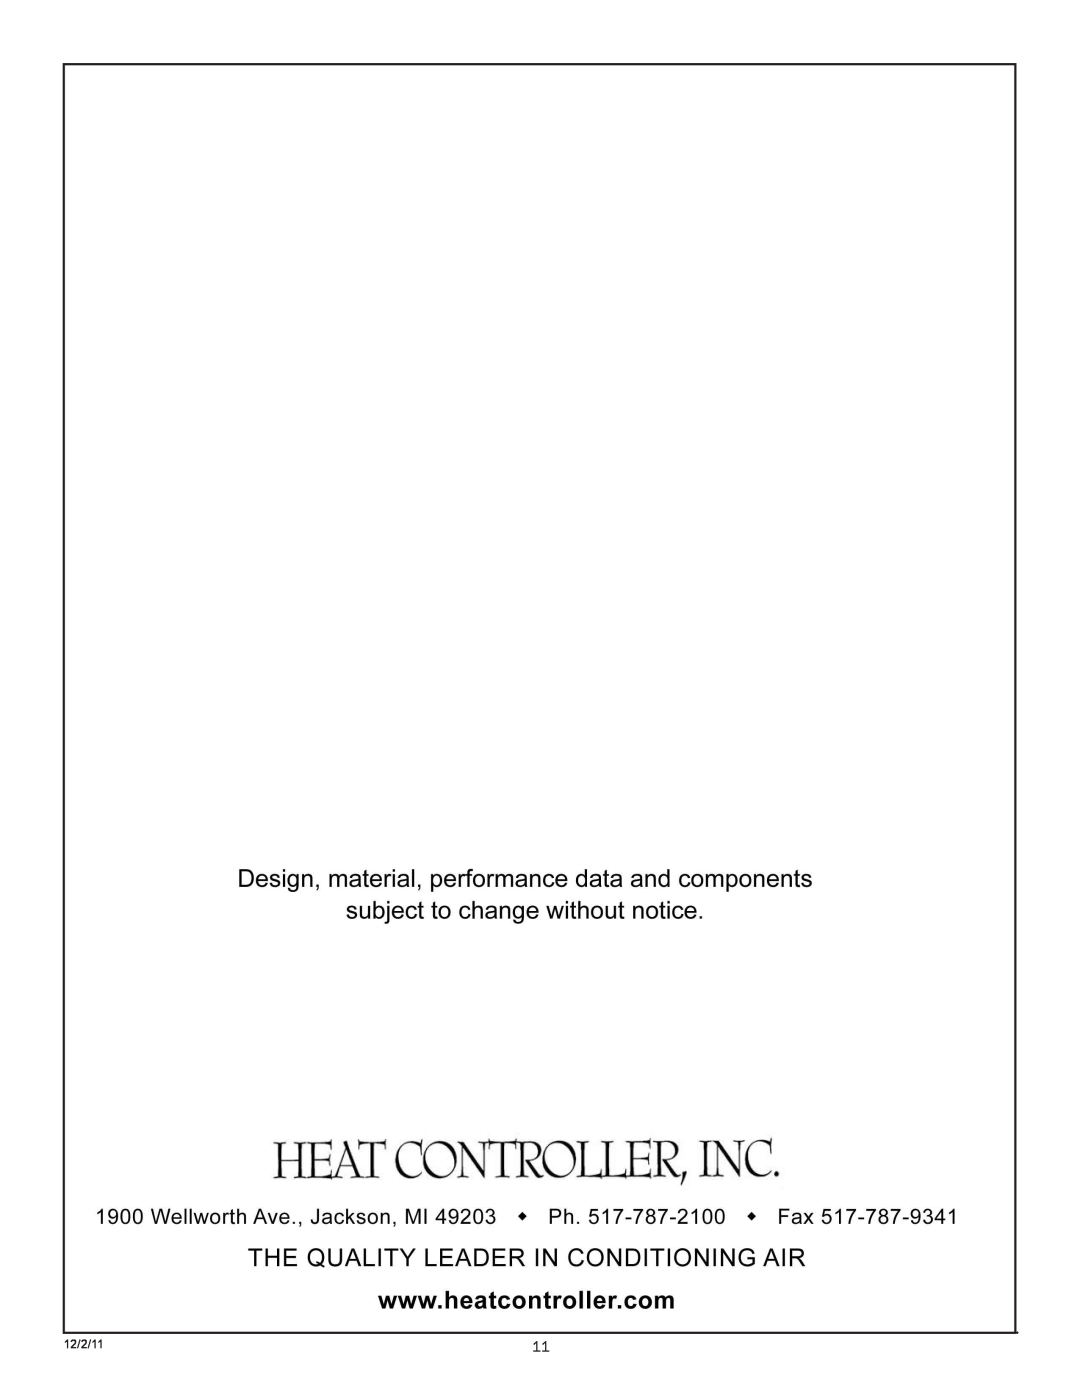 Heat Controller manual VMH 30/36 SERIES, Heat Controller, Inc, Installation, Operation & Maintenance, 12/2/11 